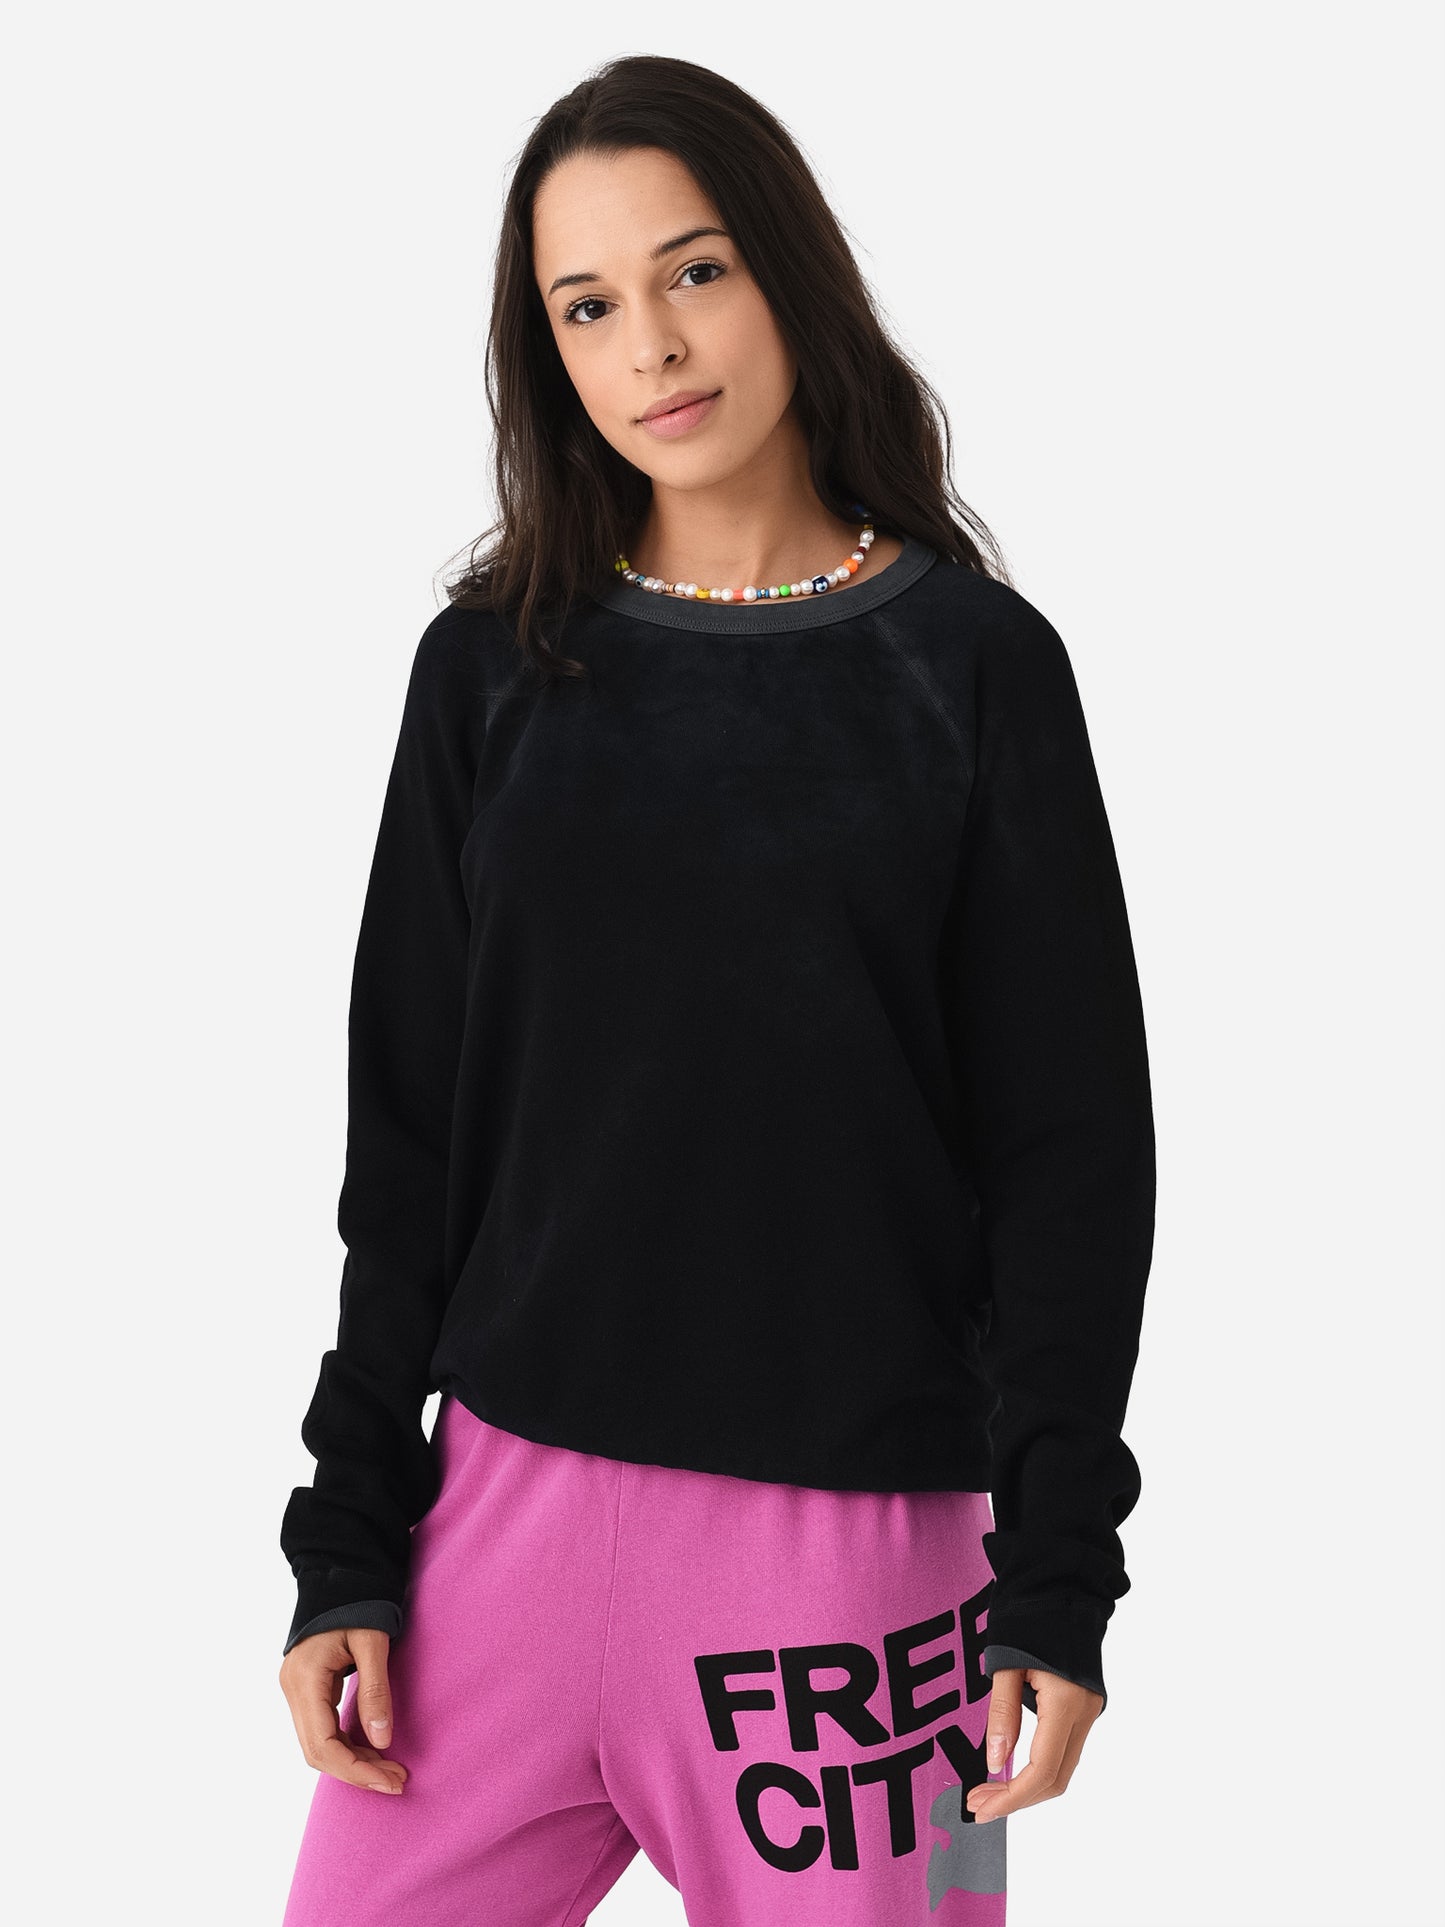 FREE CITY Women's Lucky Rabbit Sweatshirt